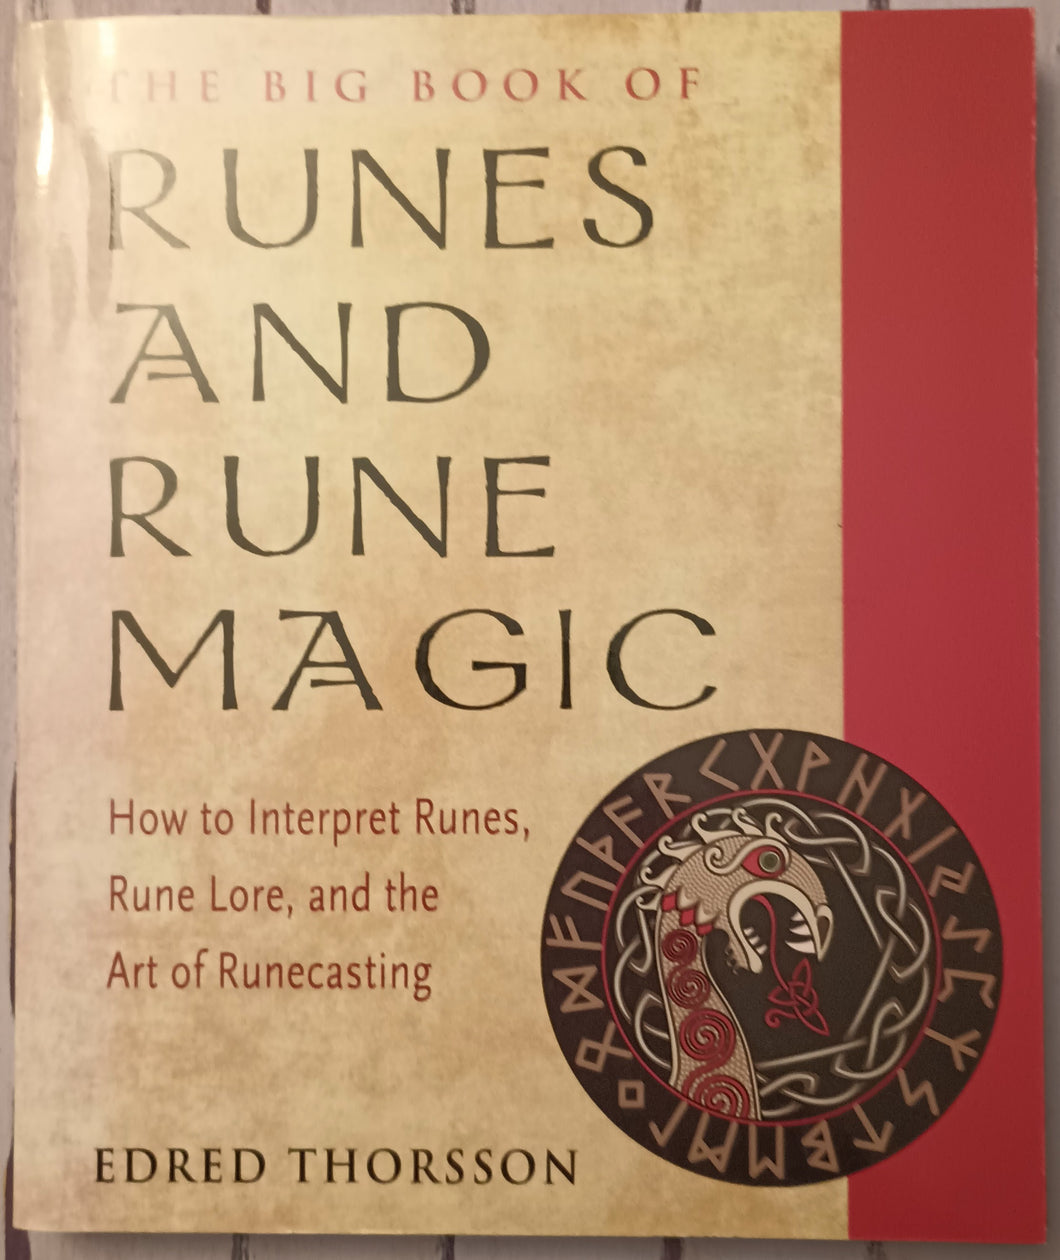 The Big Book of Runes and Rune Magic